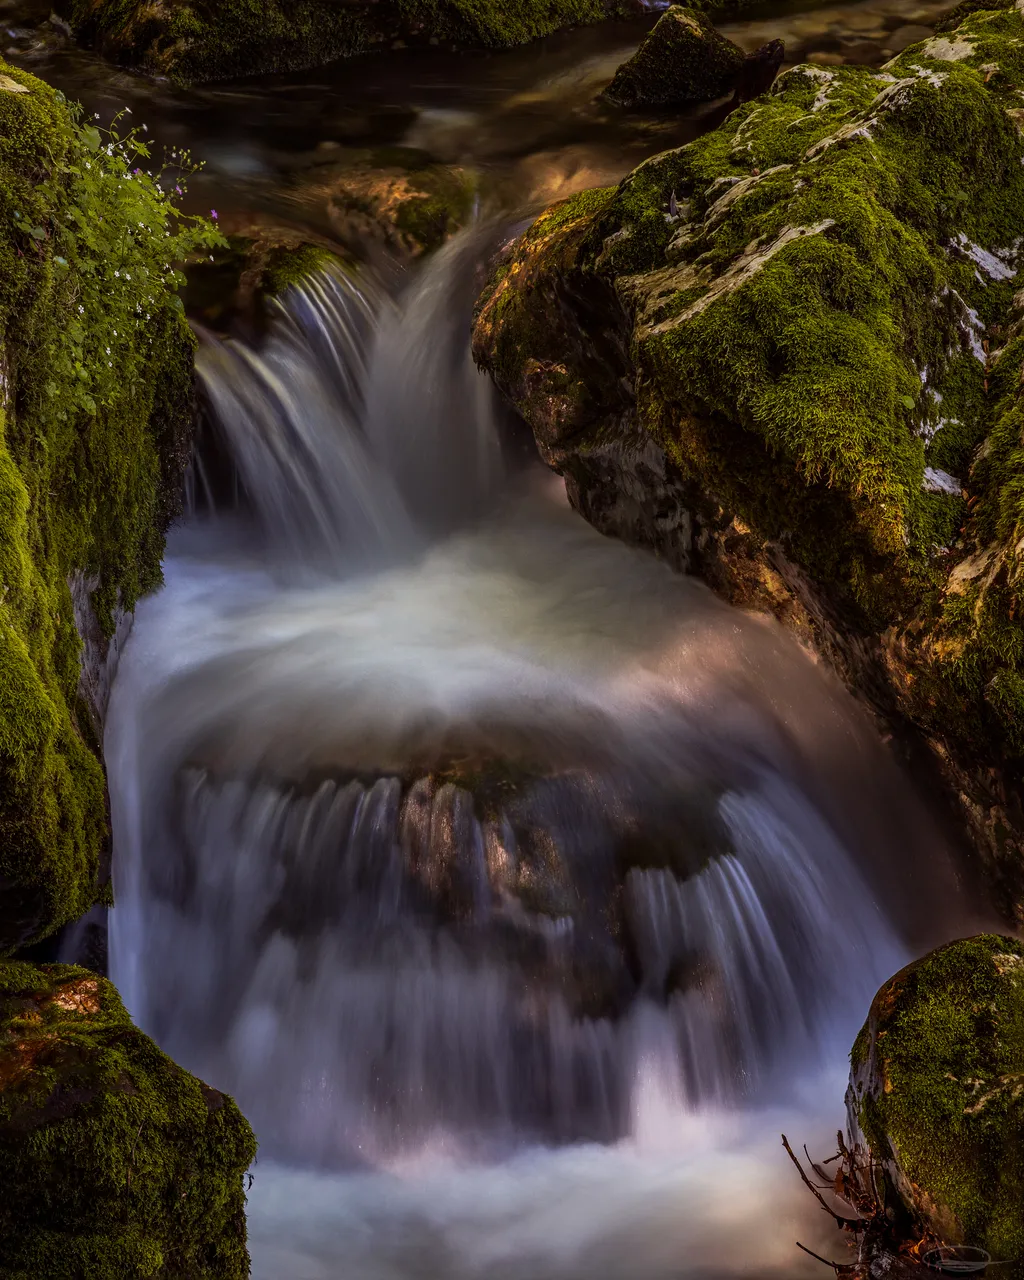 Small Waterfall in Šunikov vodni gaj, Lepena Valley - Slovenia